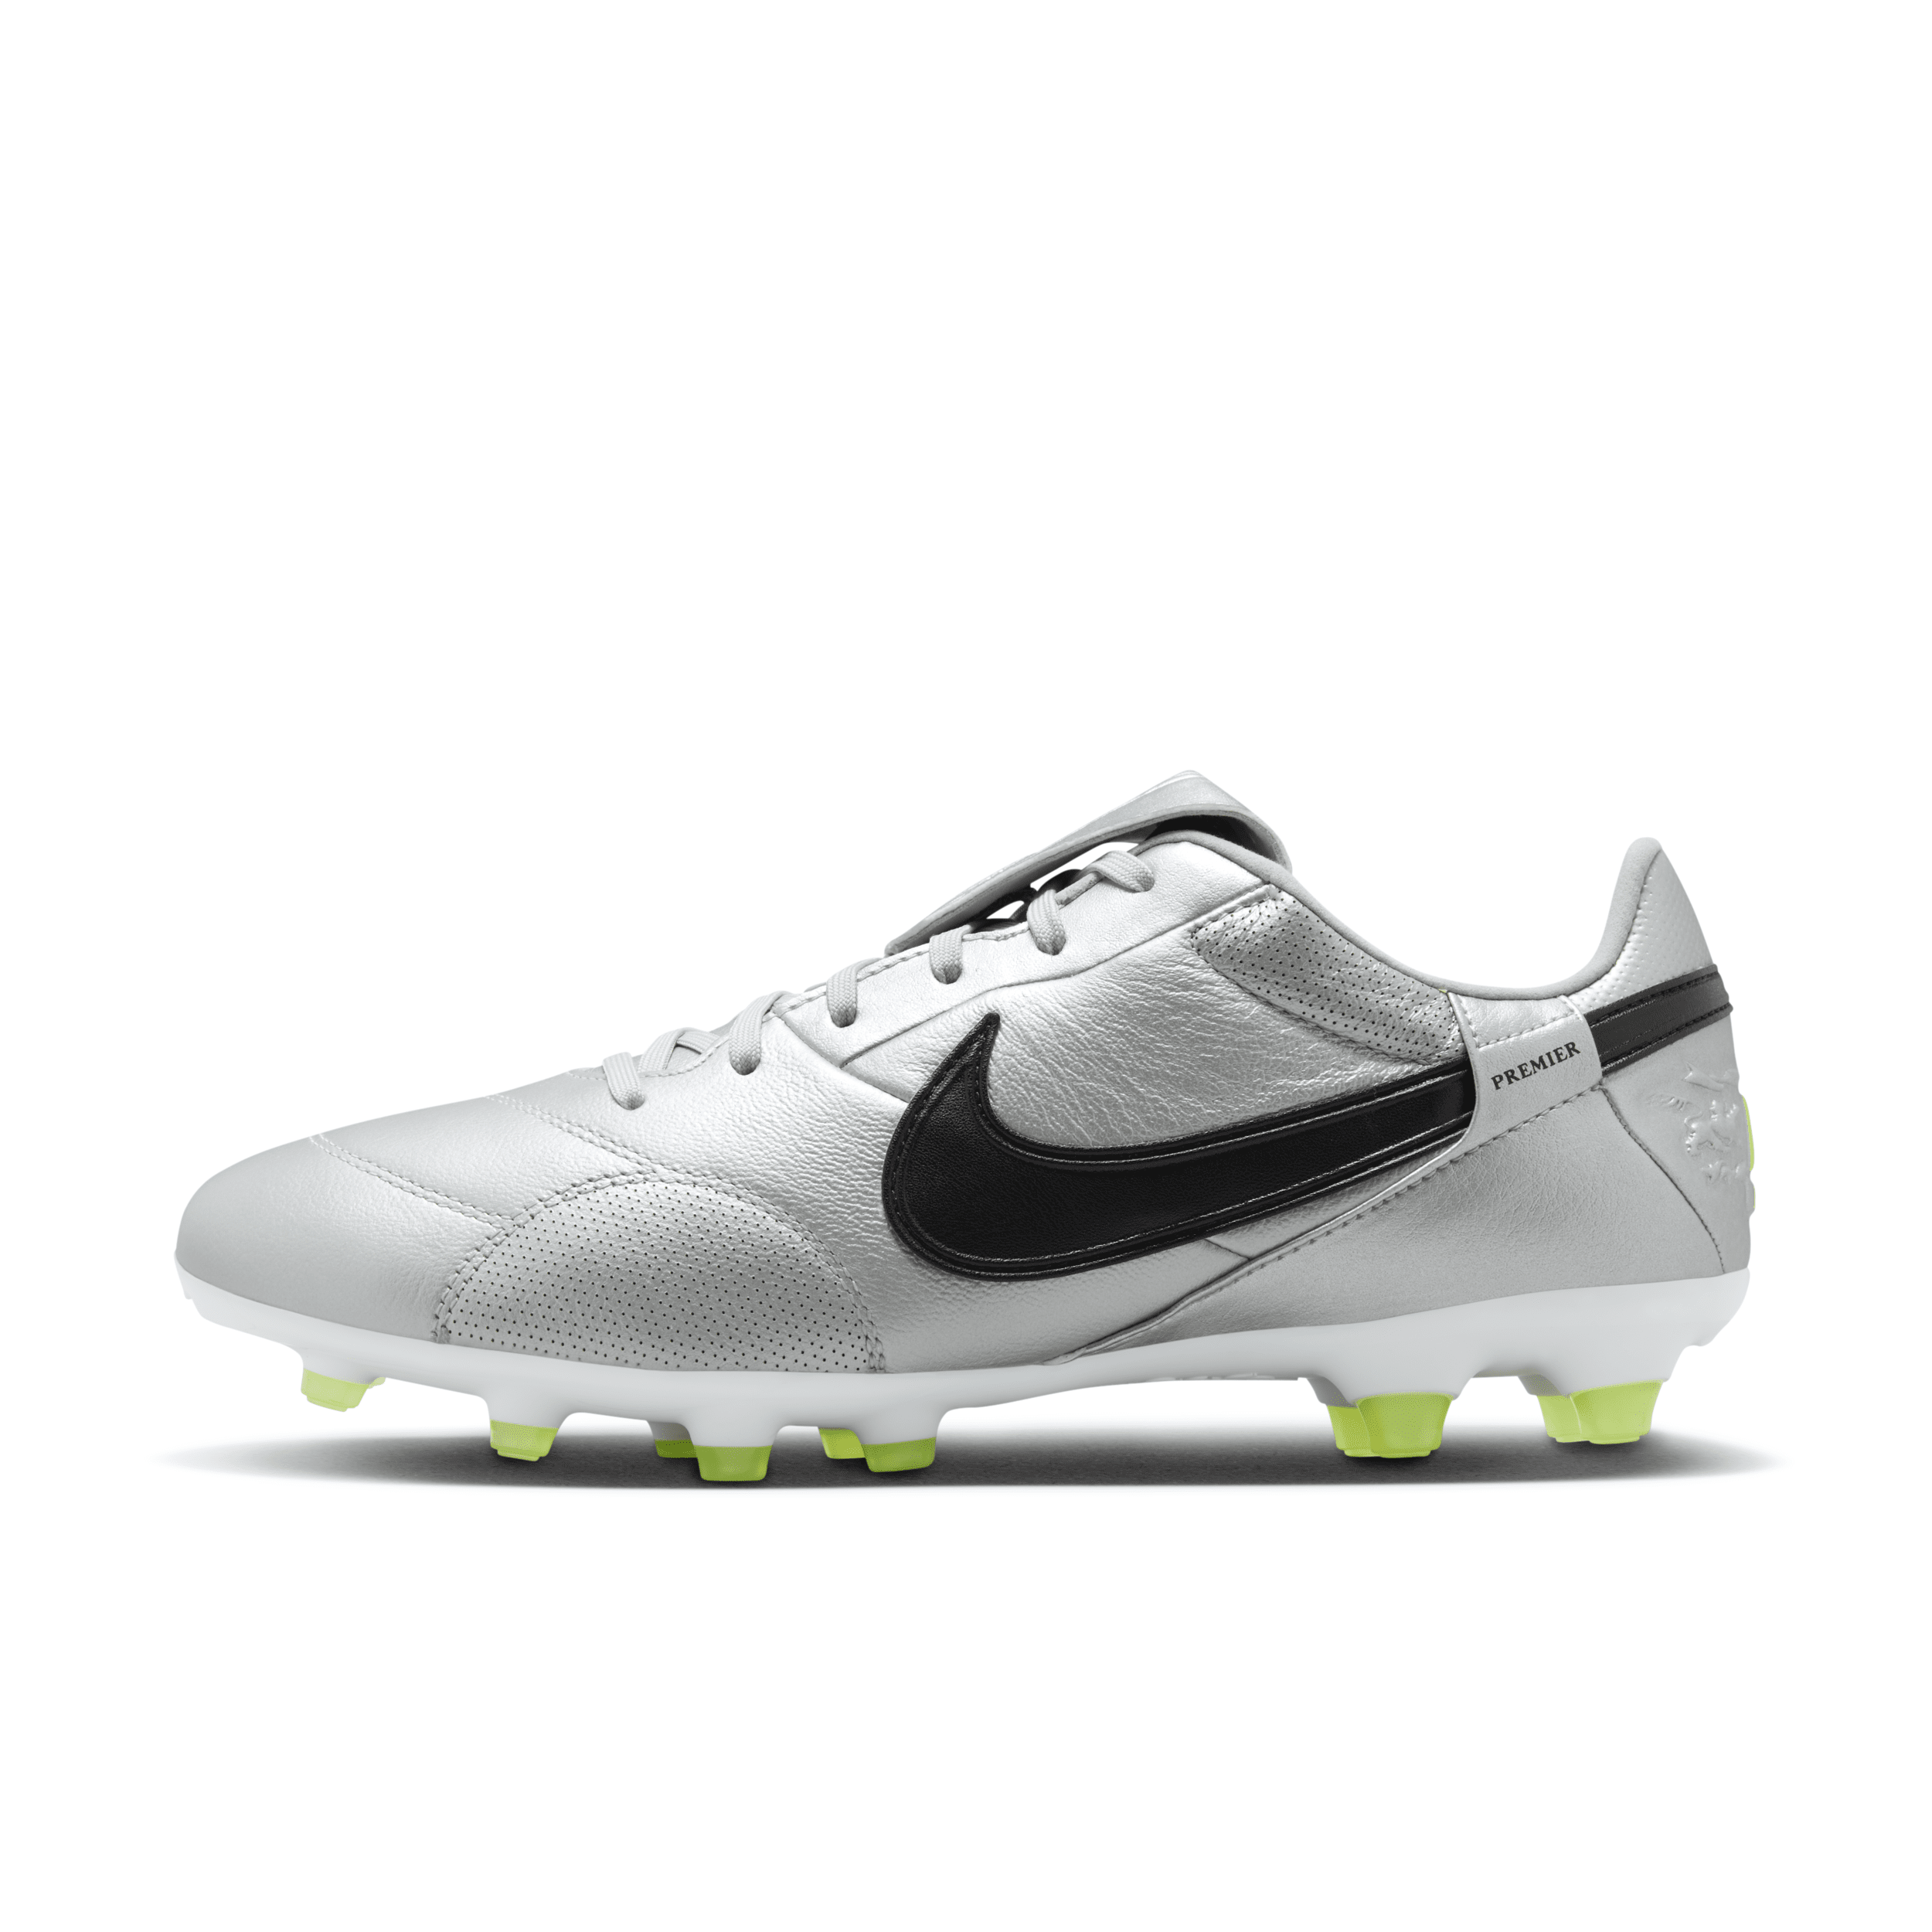 Nike Men'spremier 3 Firm-ground Soccer Cleats In Grey